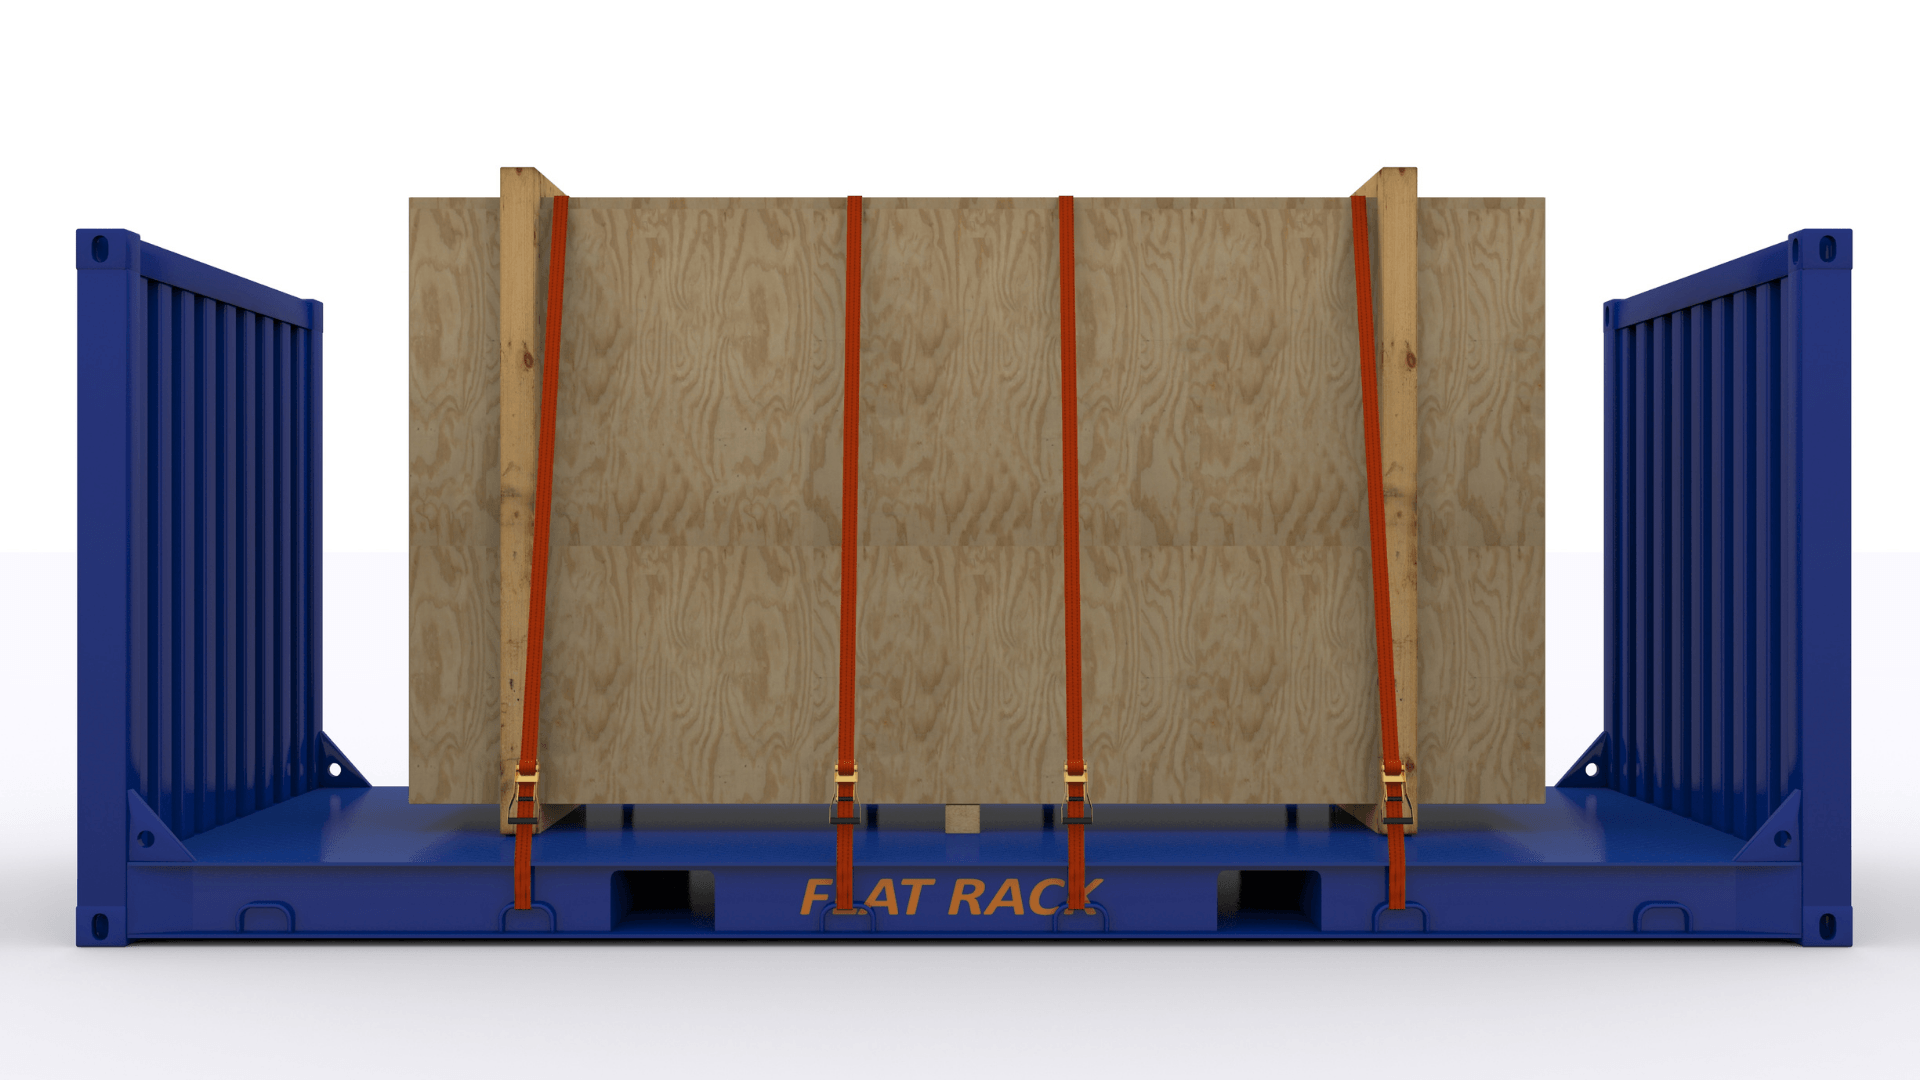 Flat rack